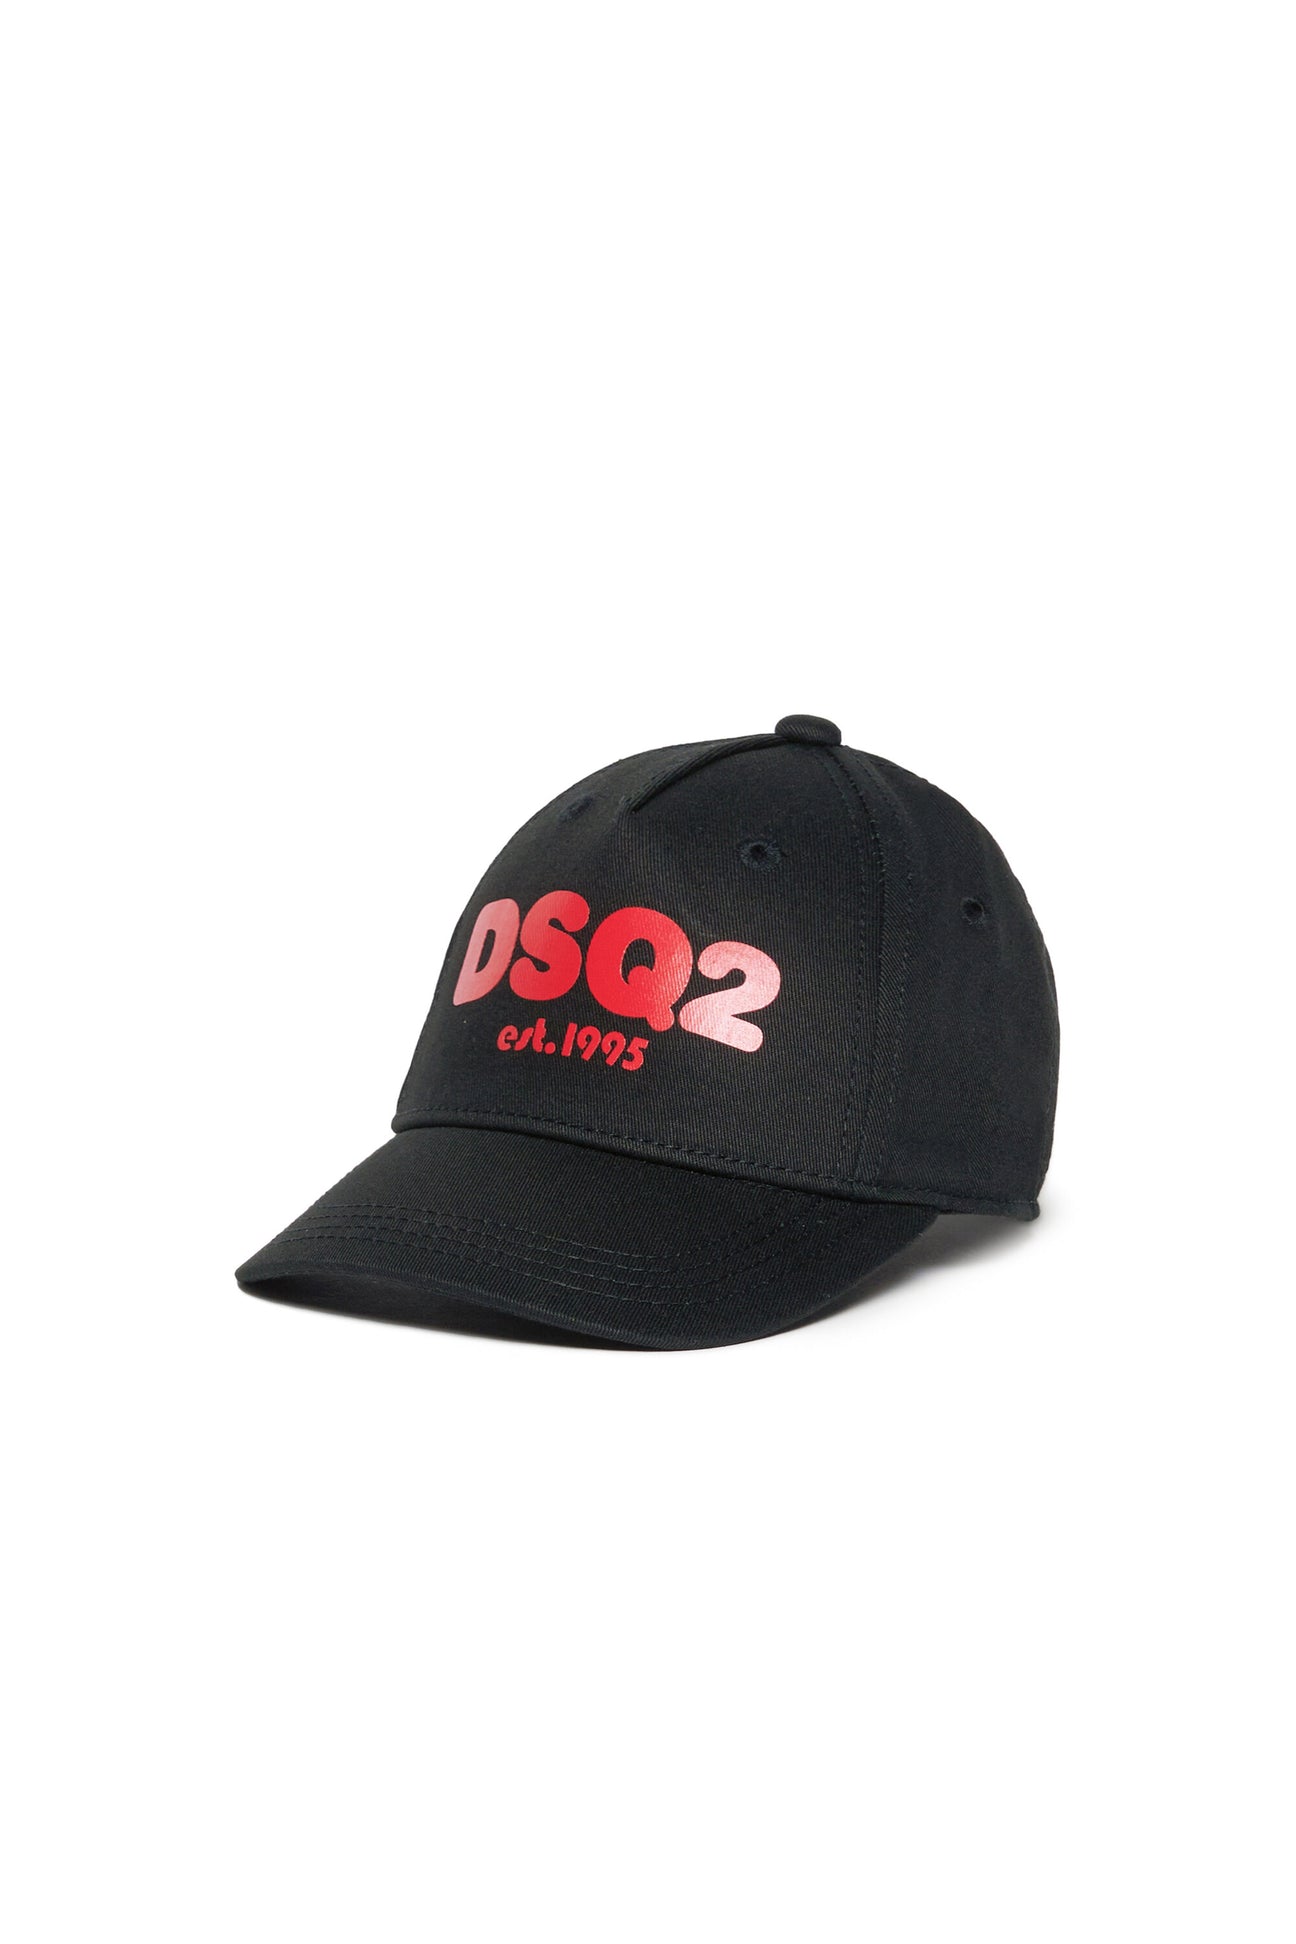 Gorra de béisbol con marca DSQ2 est.1995 